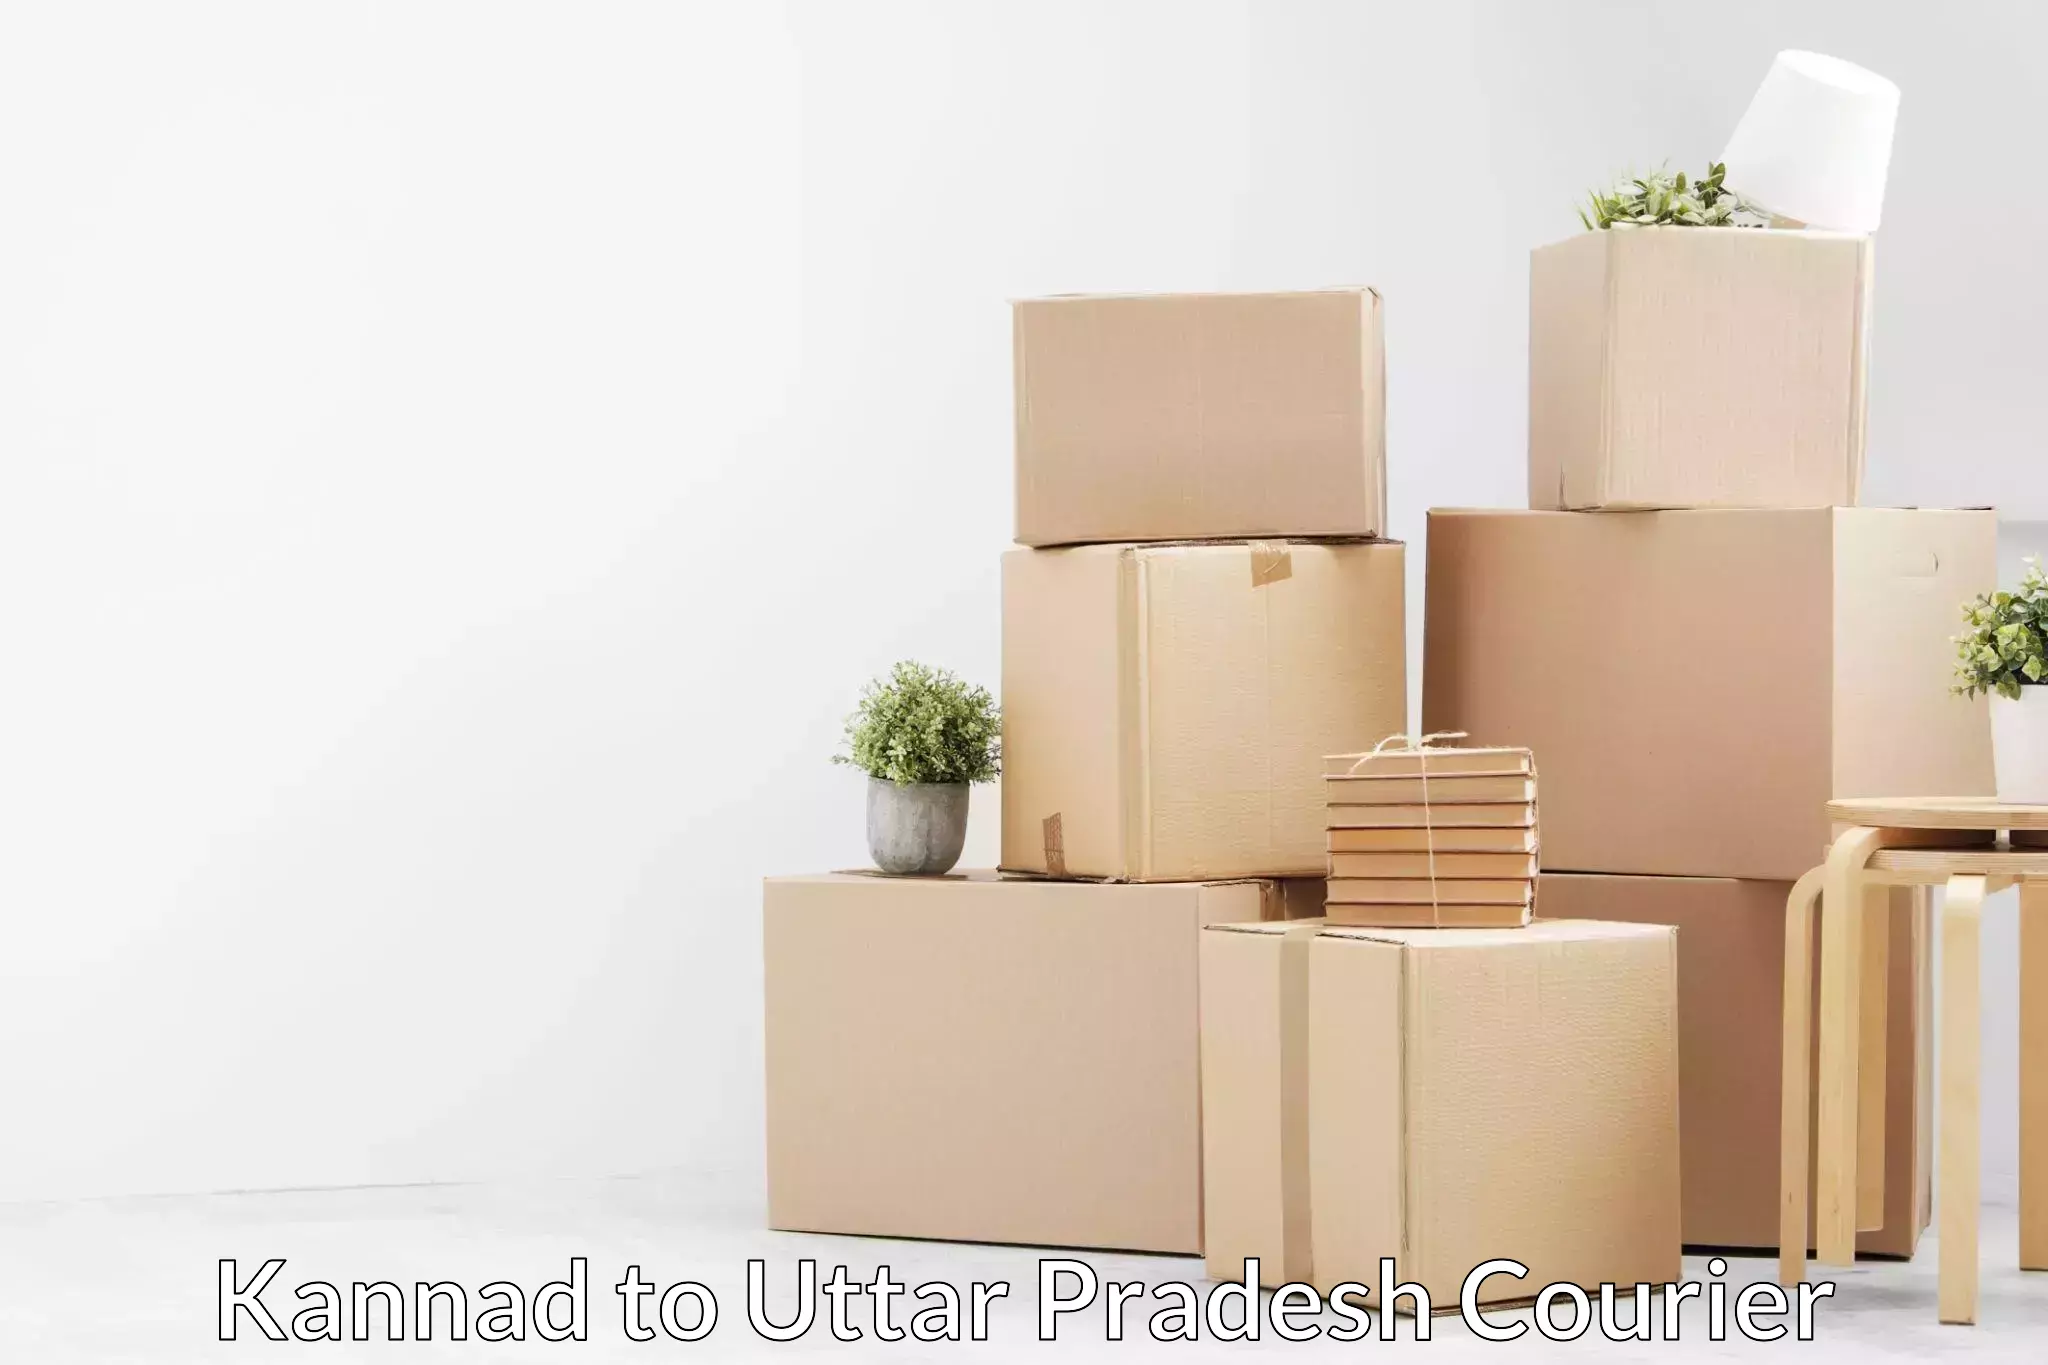 Moving and packing experts Kannad to Uttar Pradesh